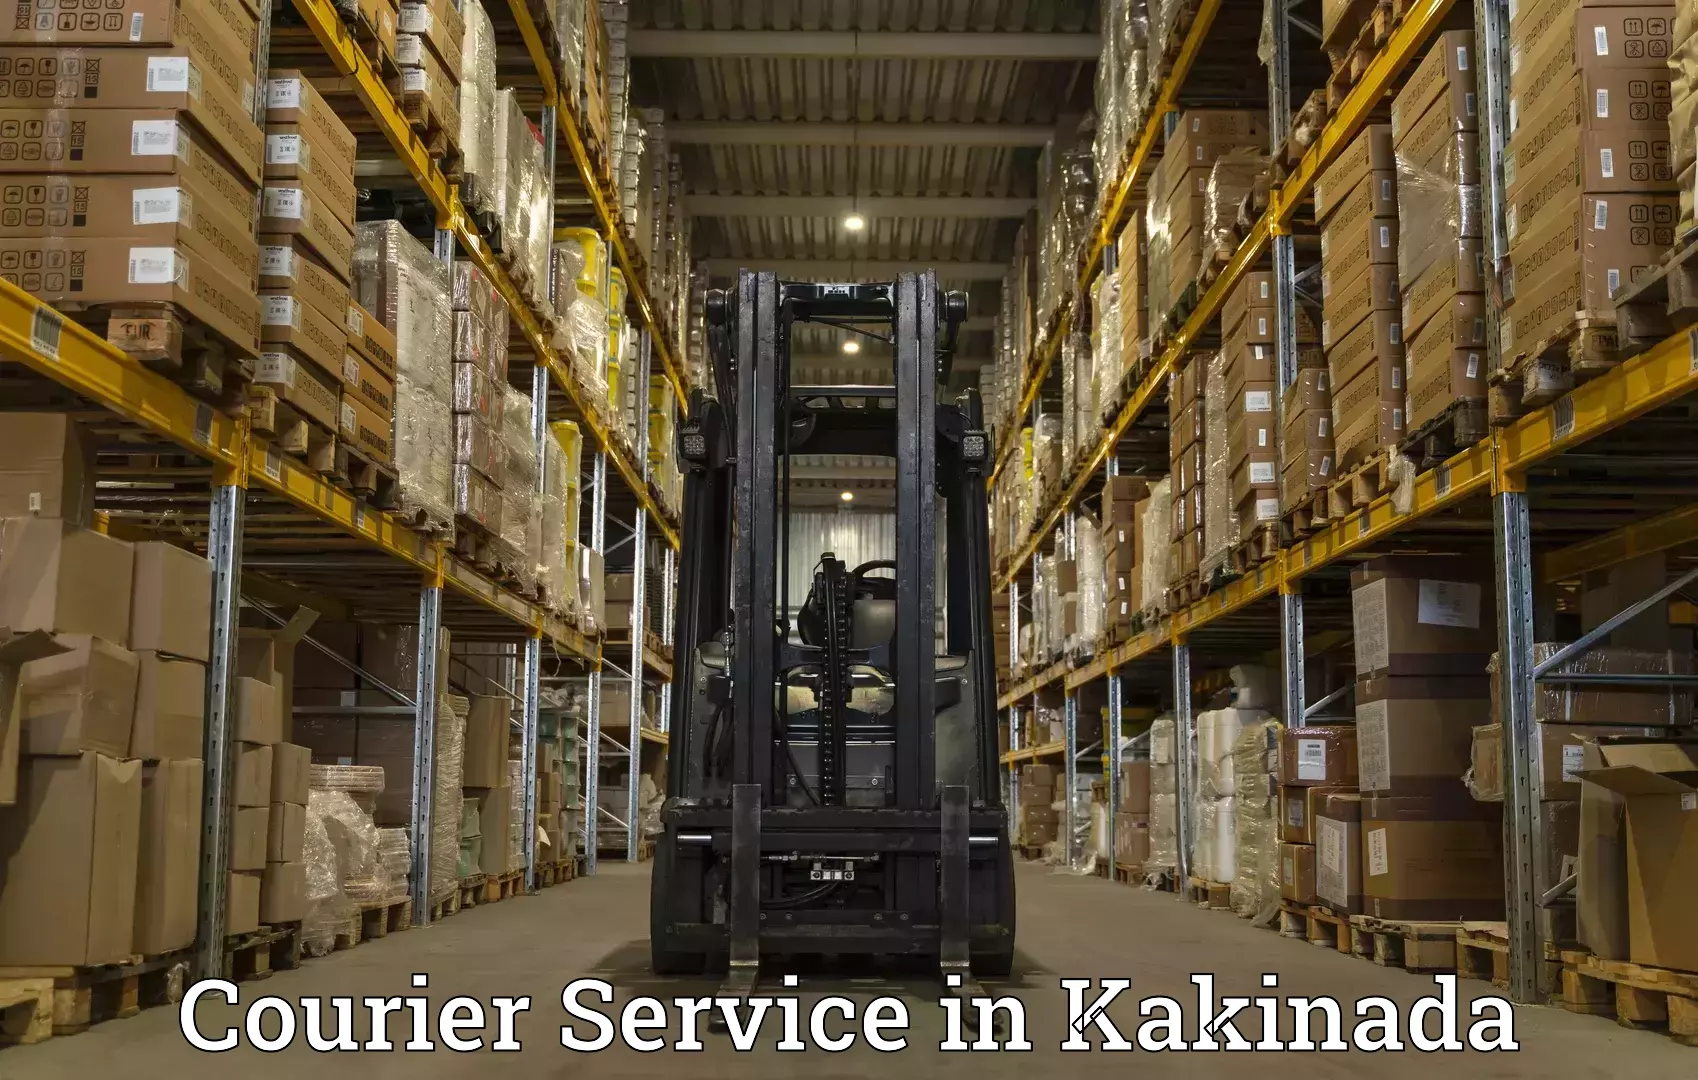 Premium delivery services in Kakinada